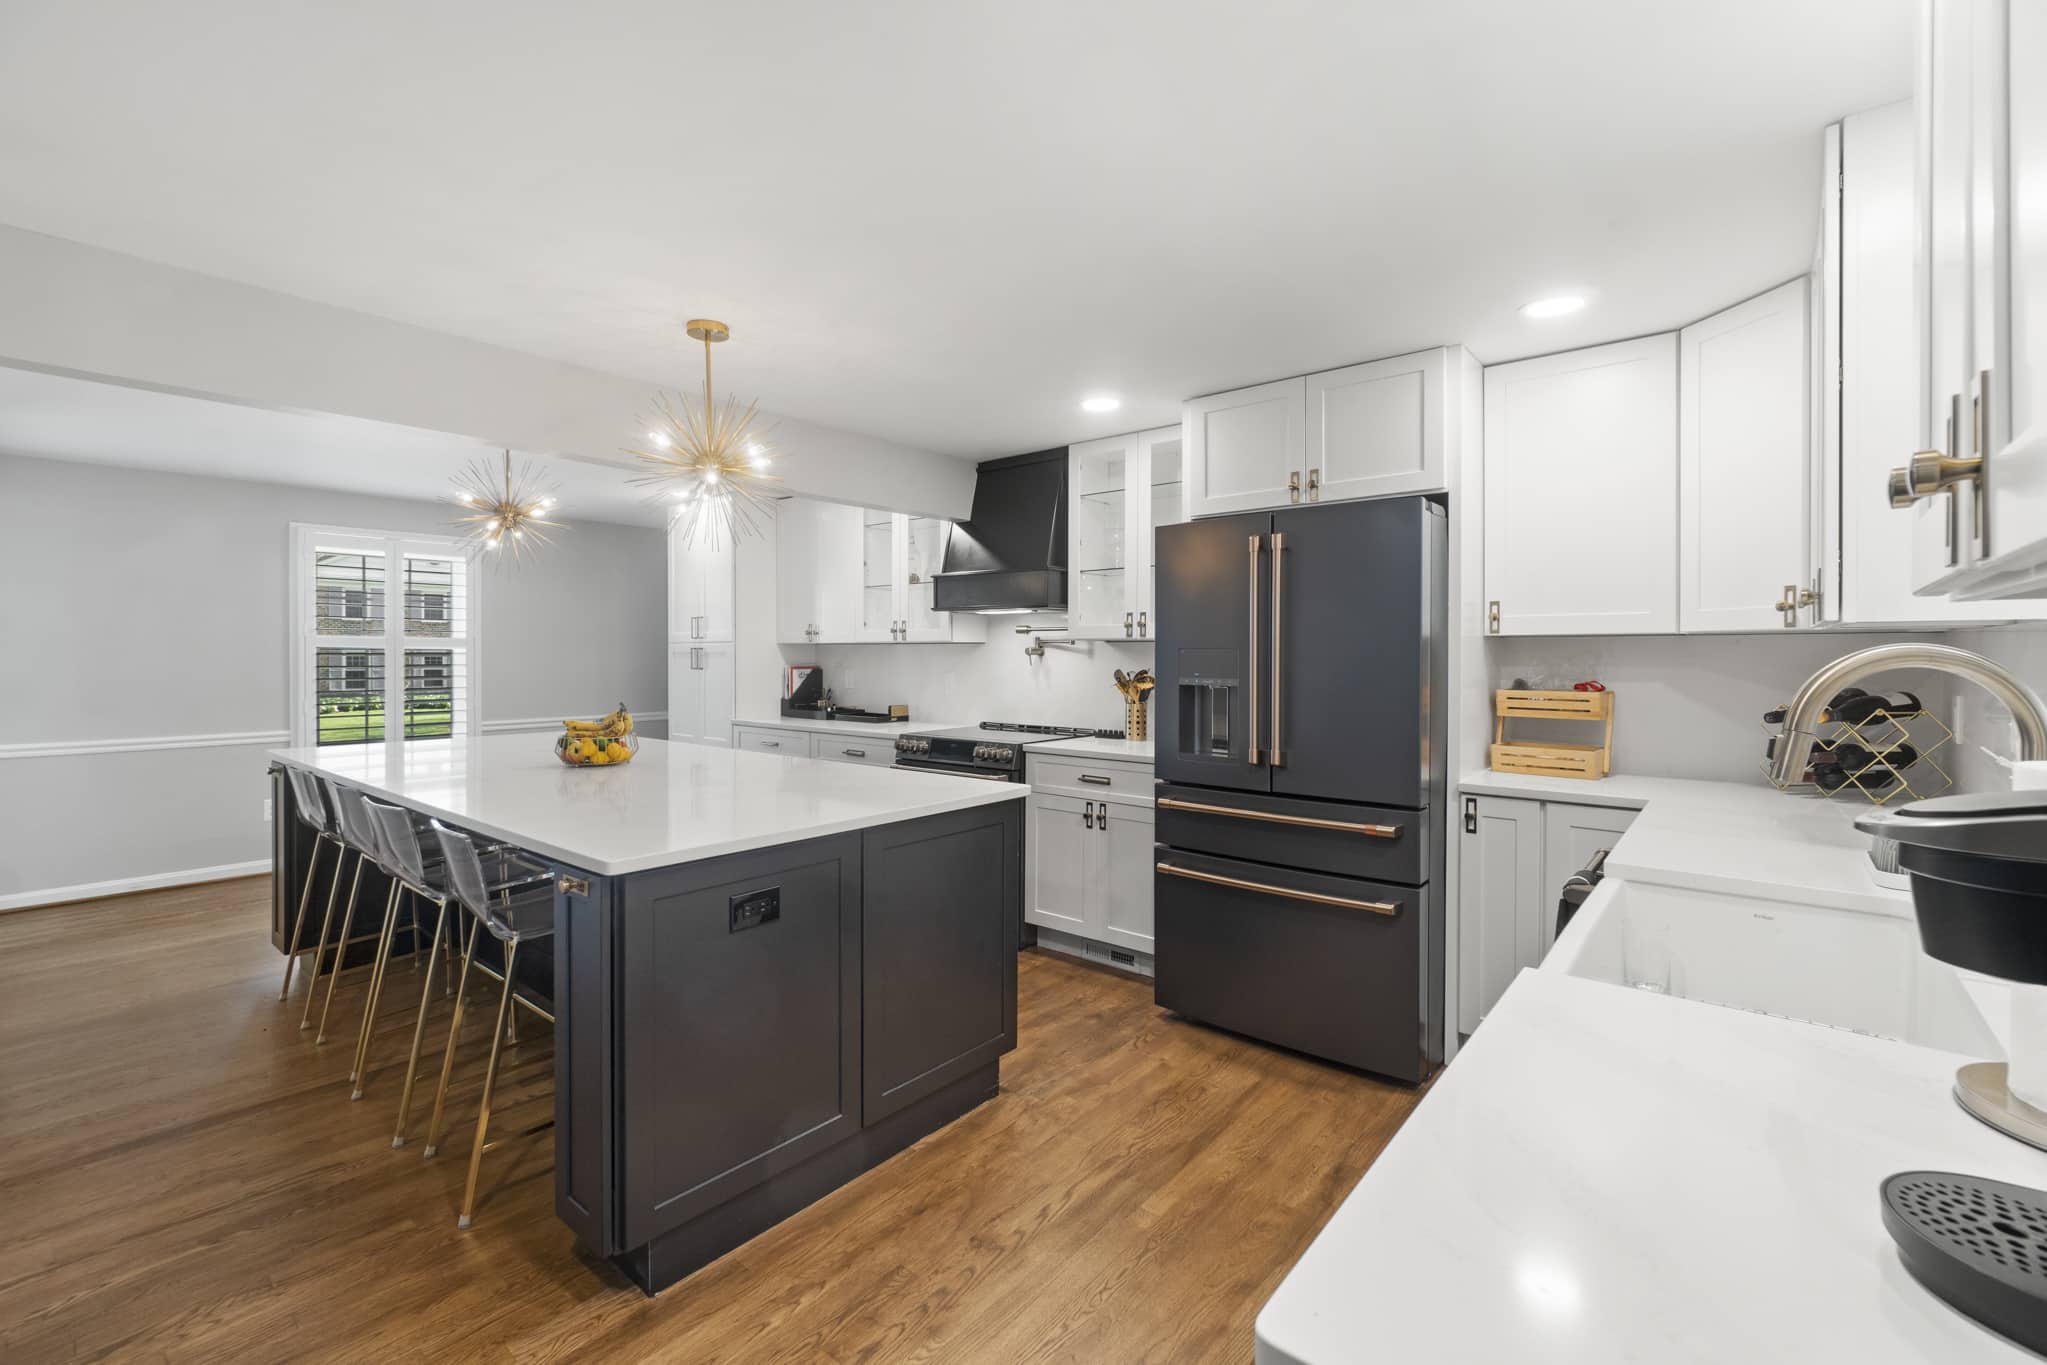 Elegant kitchen design with white shaker cabinets, white countertop, and gray kitchen island